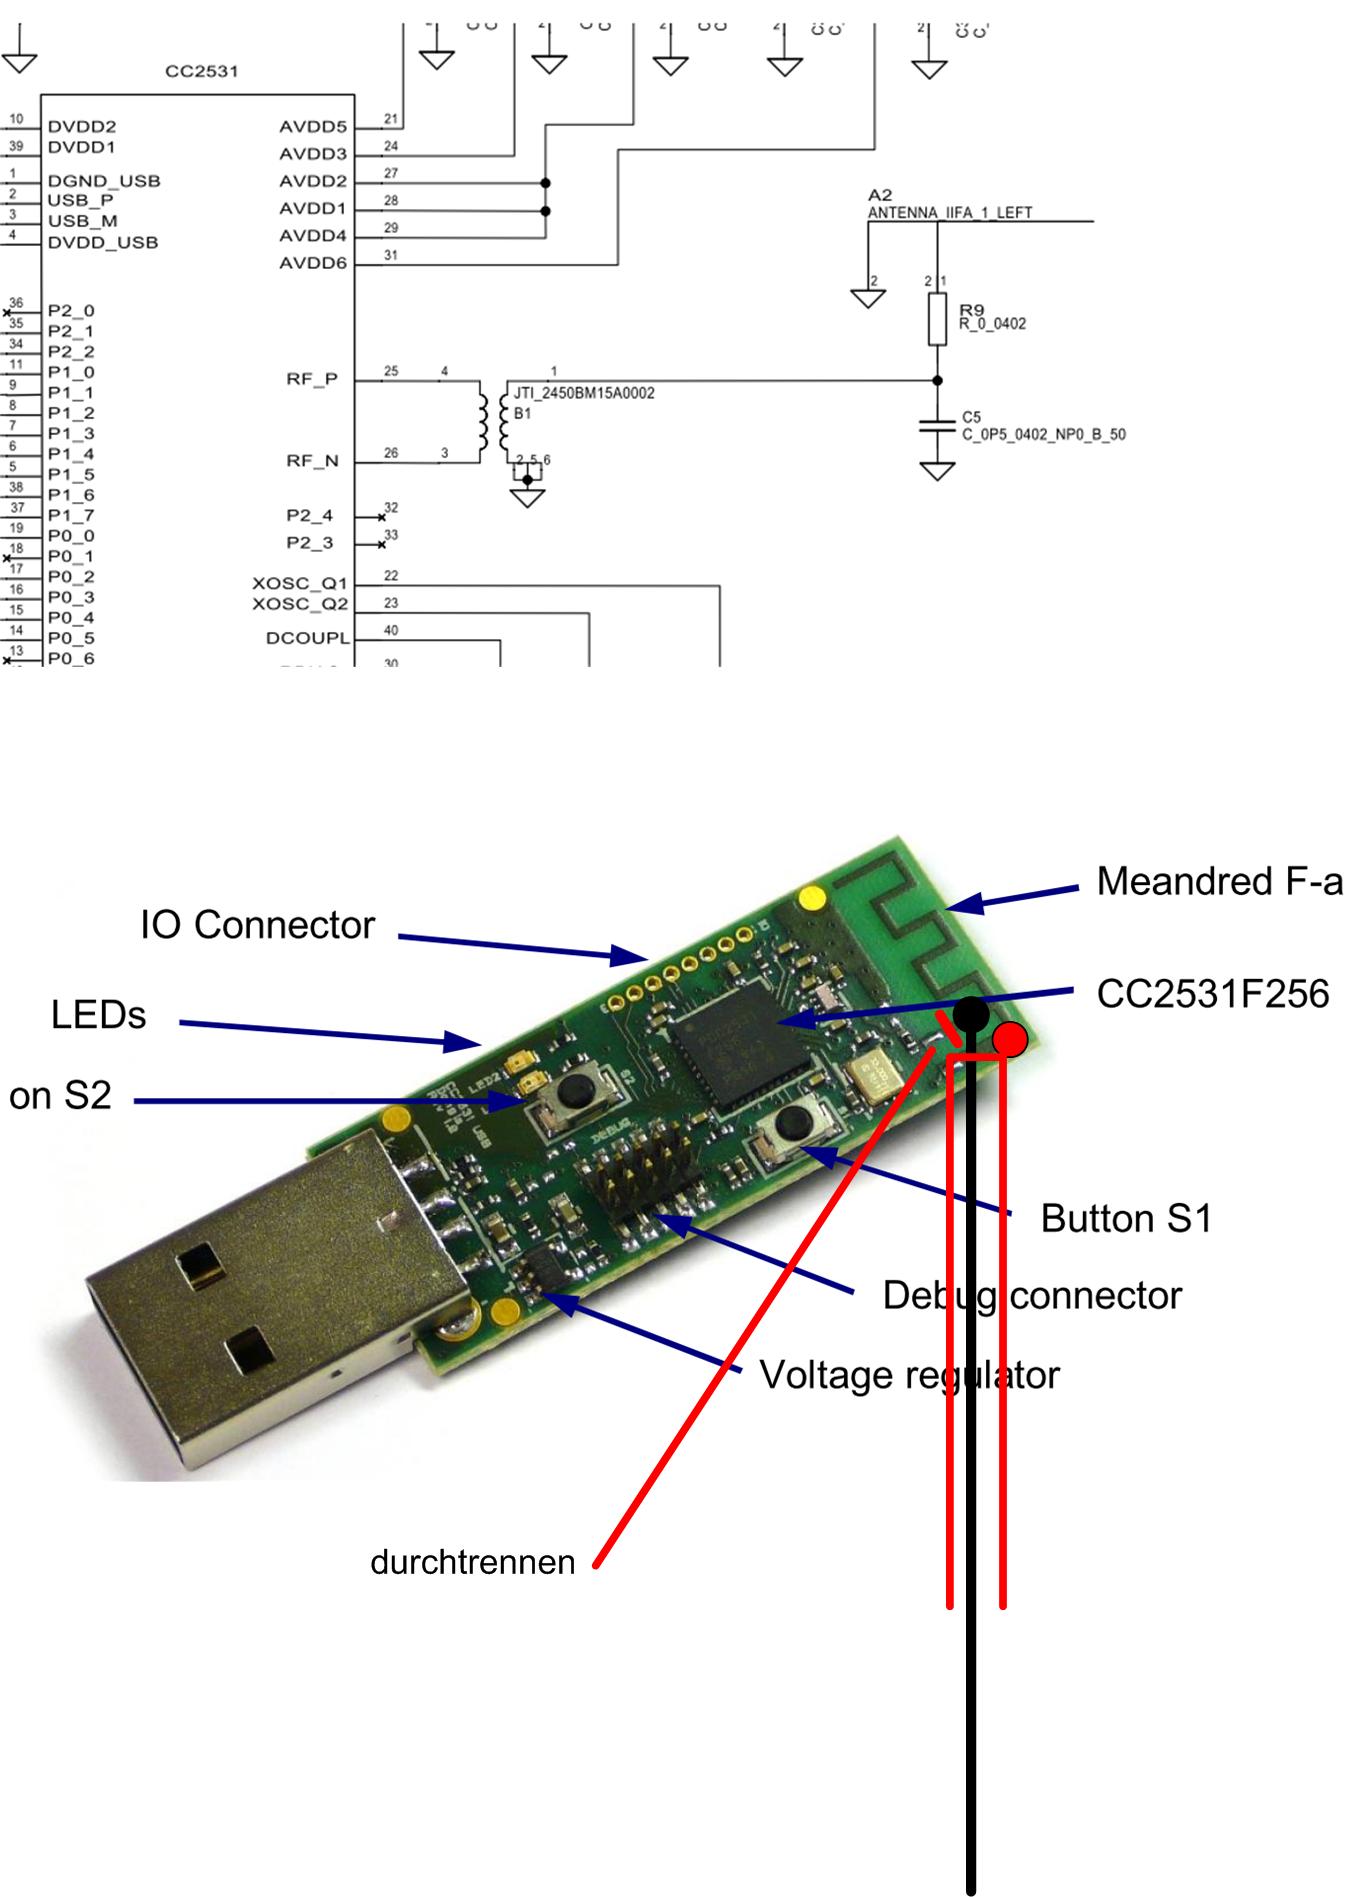 CC2531 USB Adapter Antenna mod | Hackaday.io